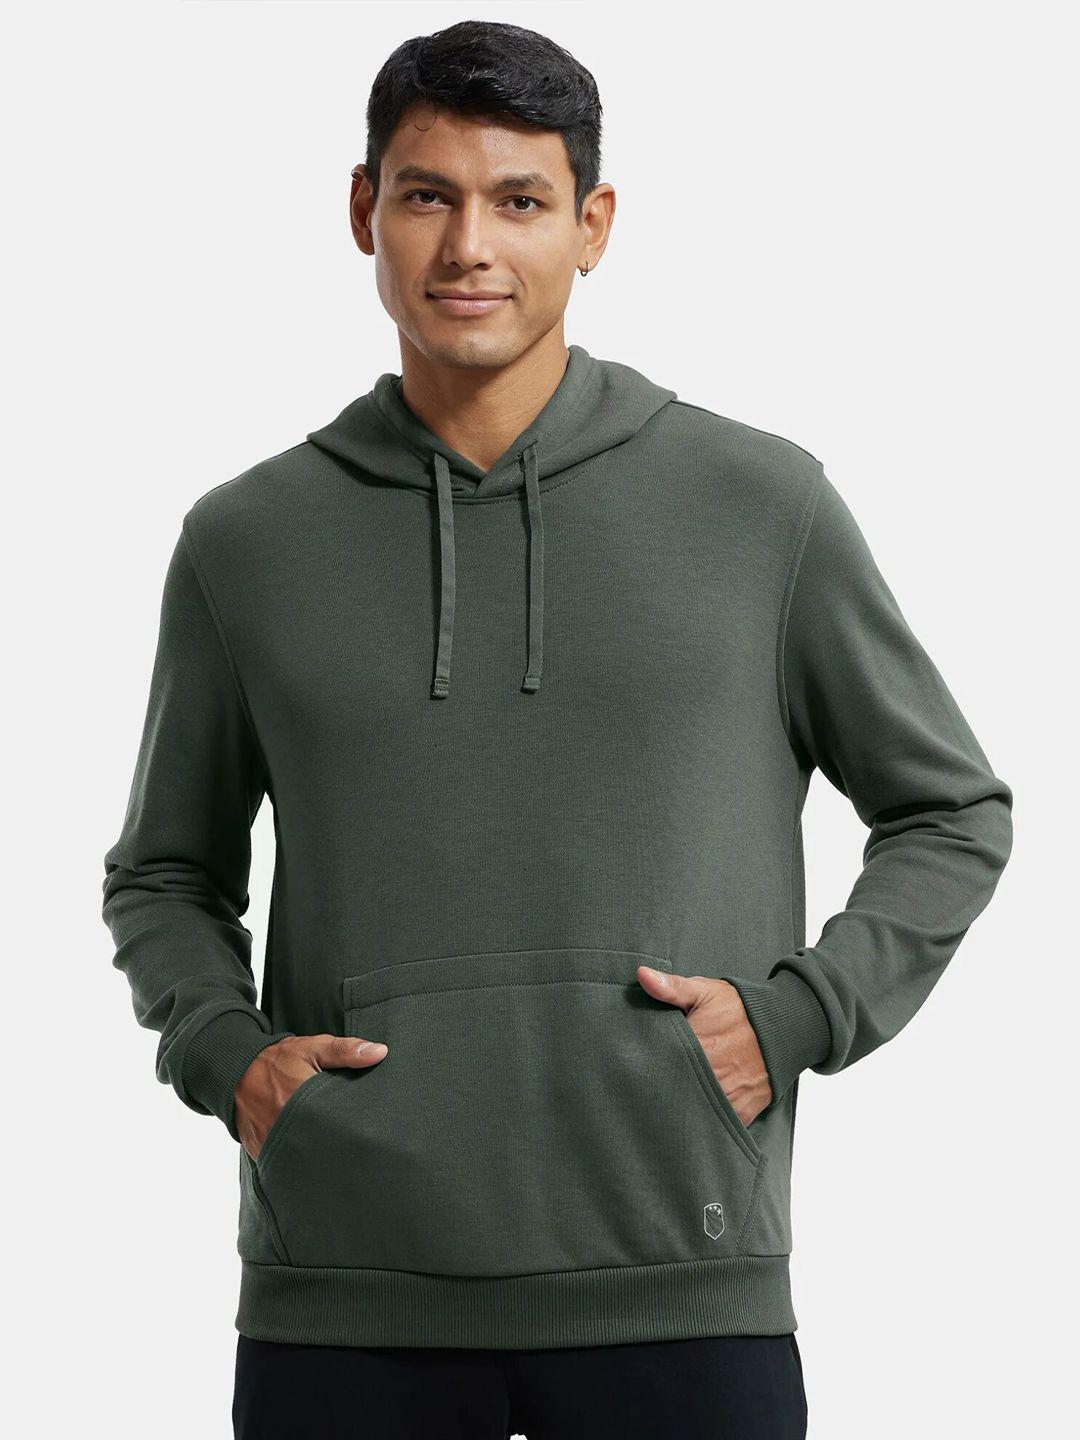 jockey long sleeves pure cotton hooded pullover sweatshirt